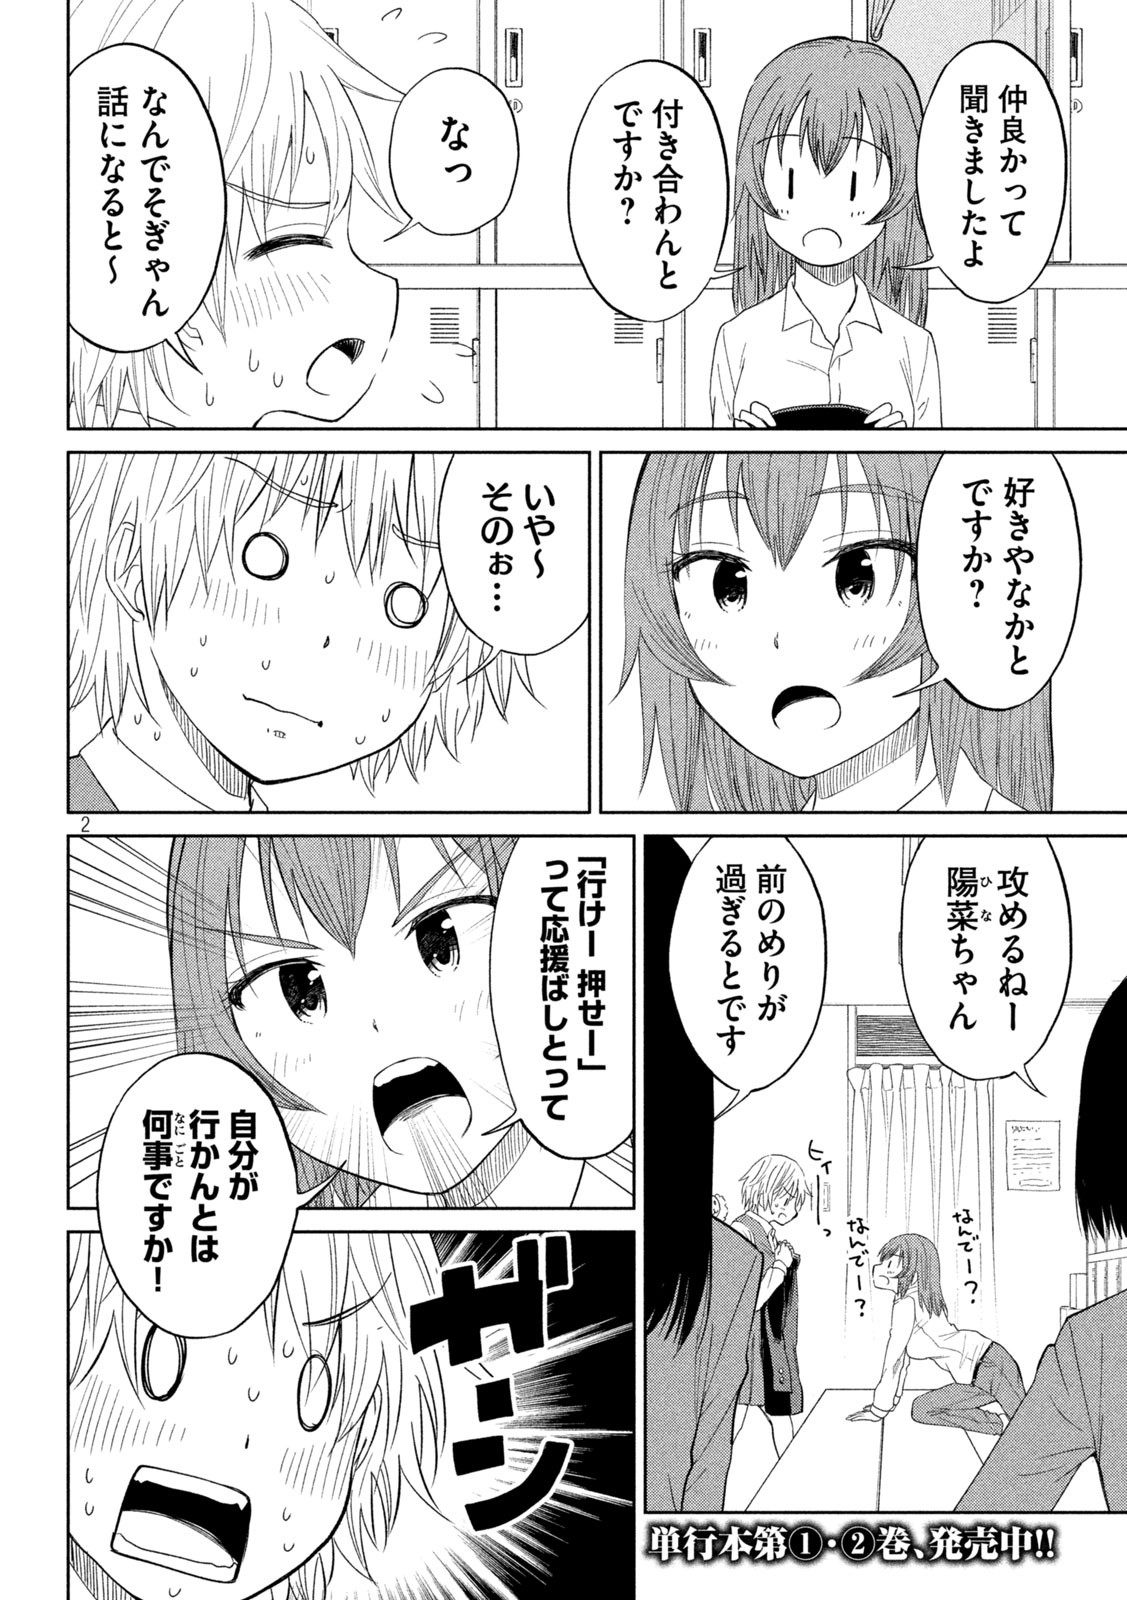 Koharu haru! - Chapter 102 - Page 2